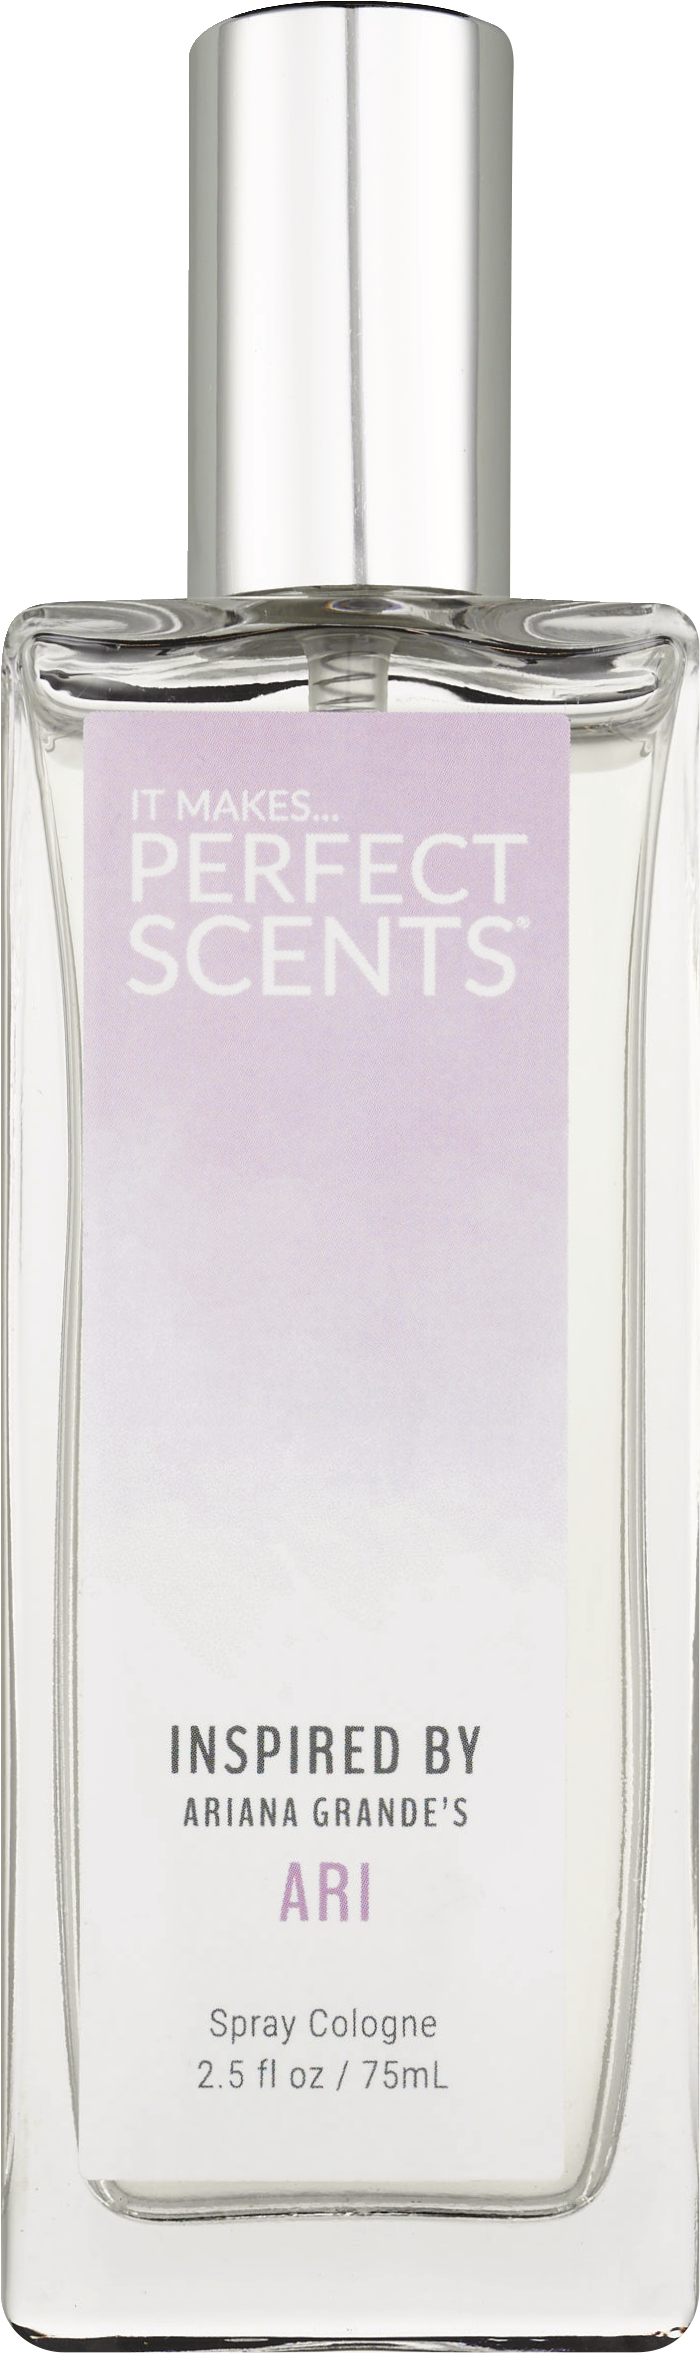 Perfect Scents Inspired by Ariana Grande's Ari - Colonia en spray, 2.5 oz